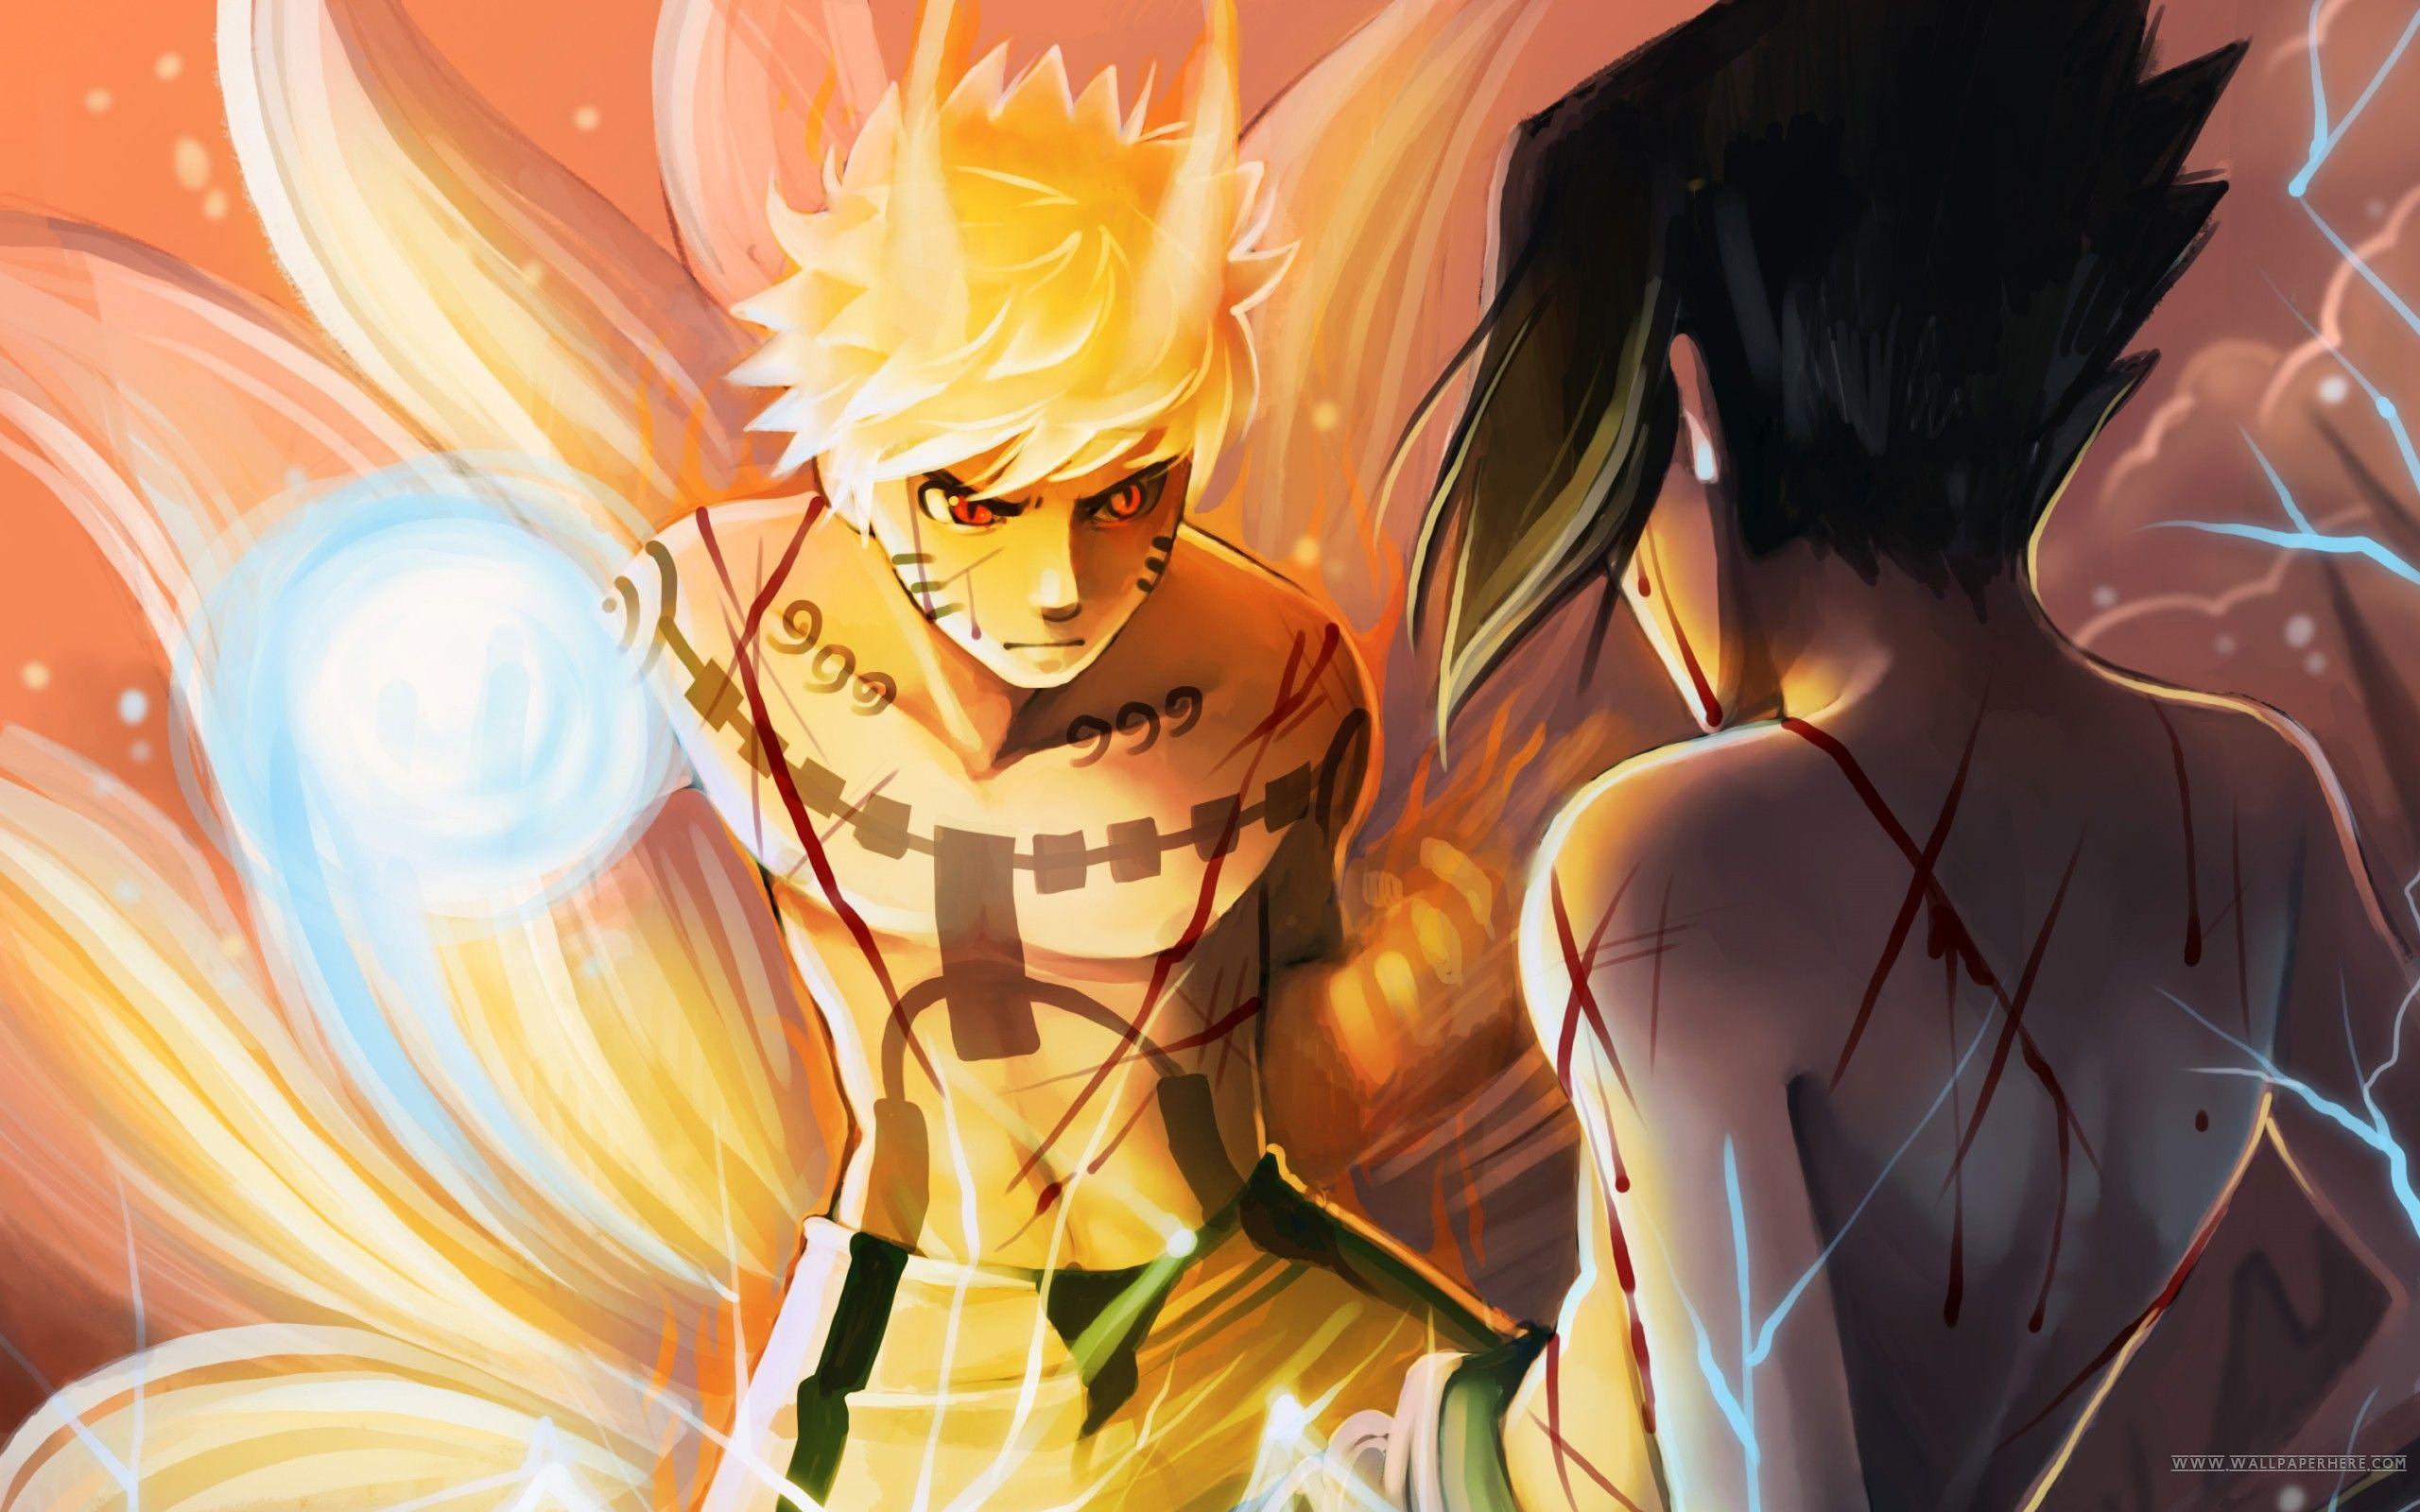 Uzumaki Naruto vs Uchiha Sasuke. anime boyz. Vs and X